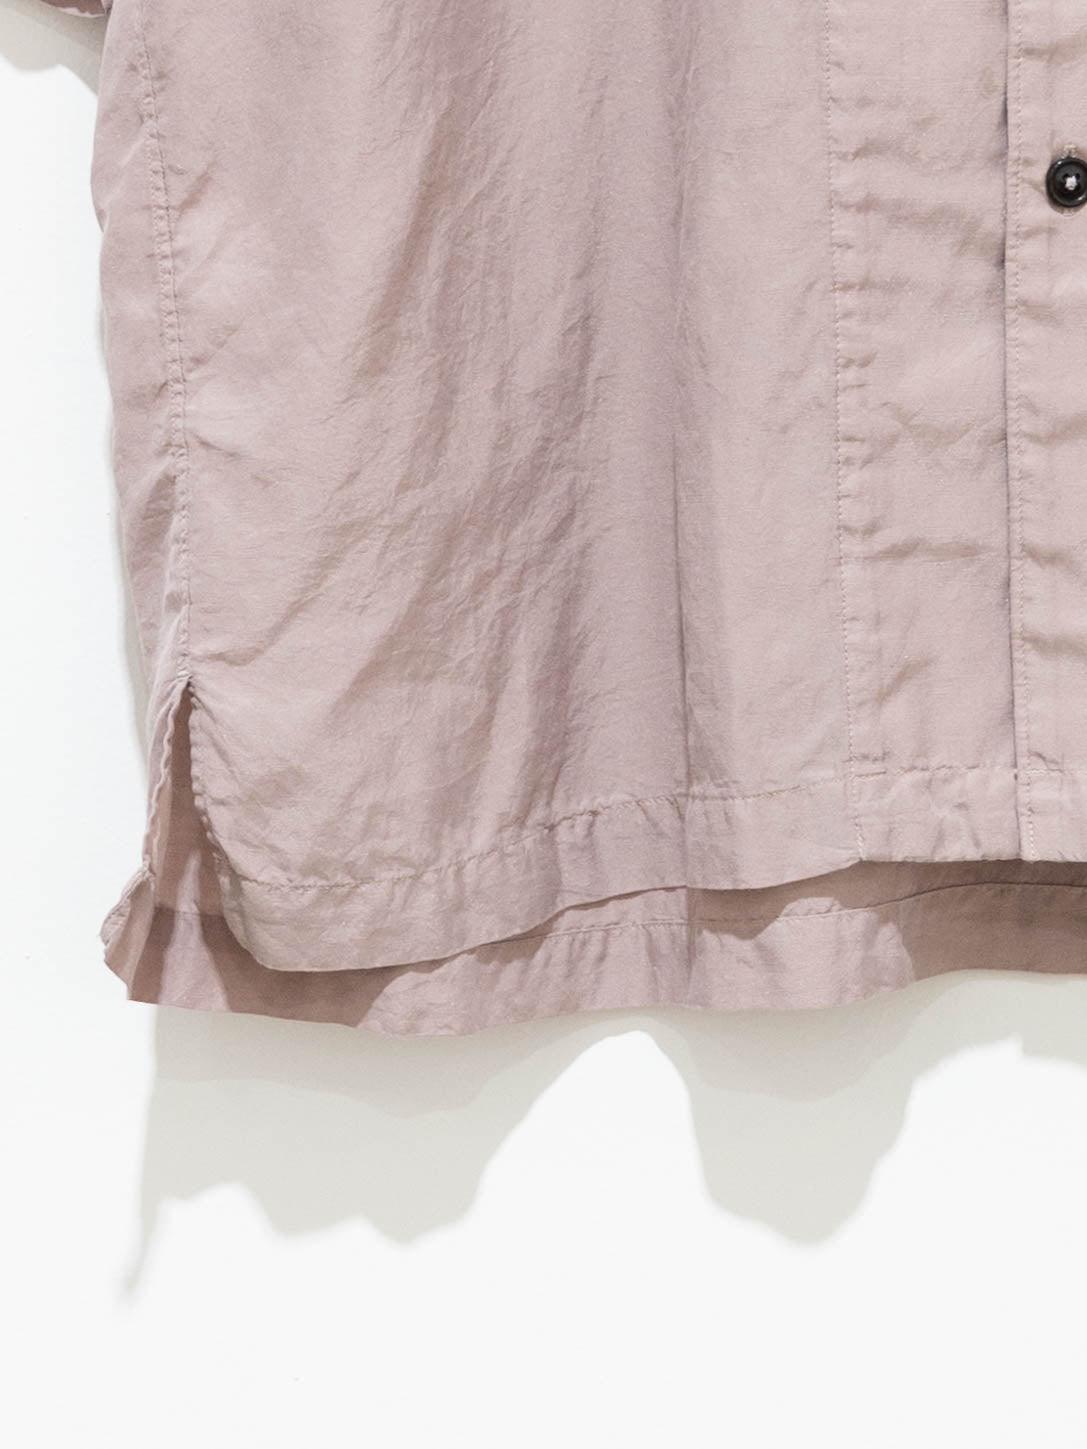 Namu Shop - Unfil Cotton Silk Twill S/S Shirt - Lilac Gray